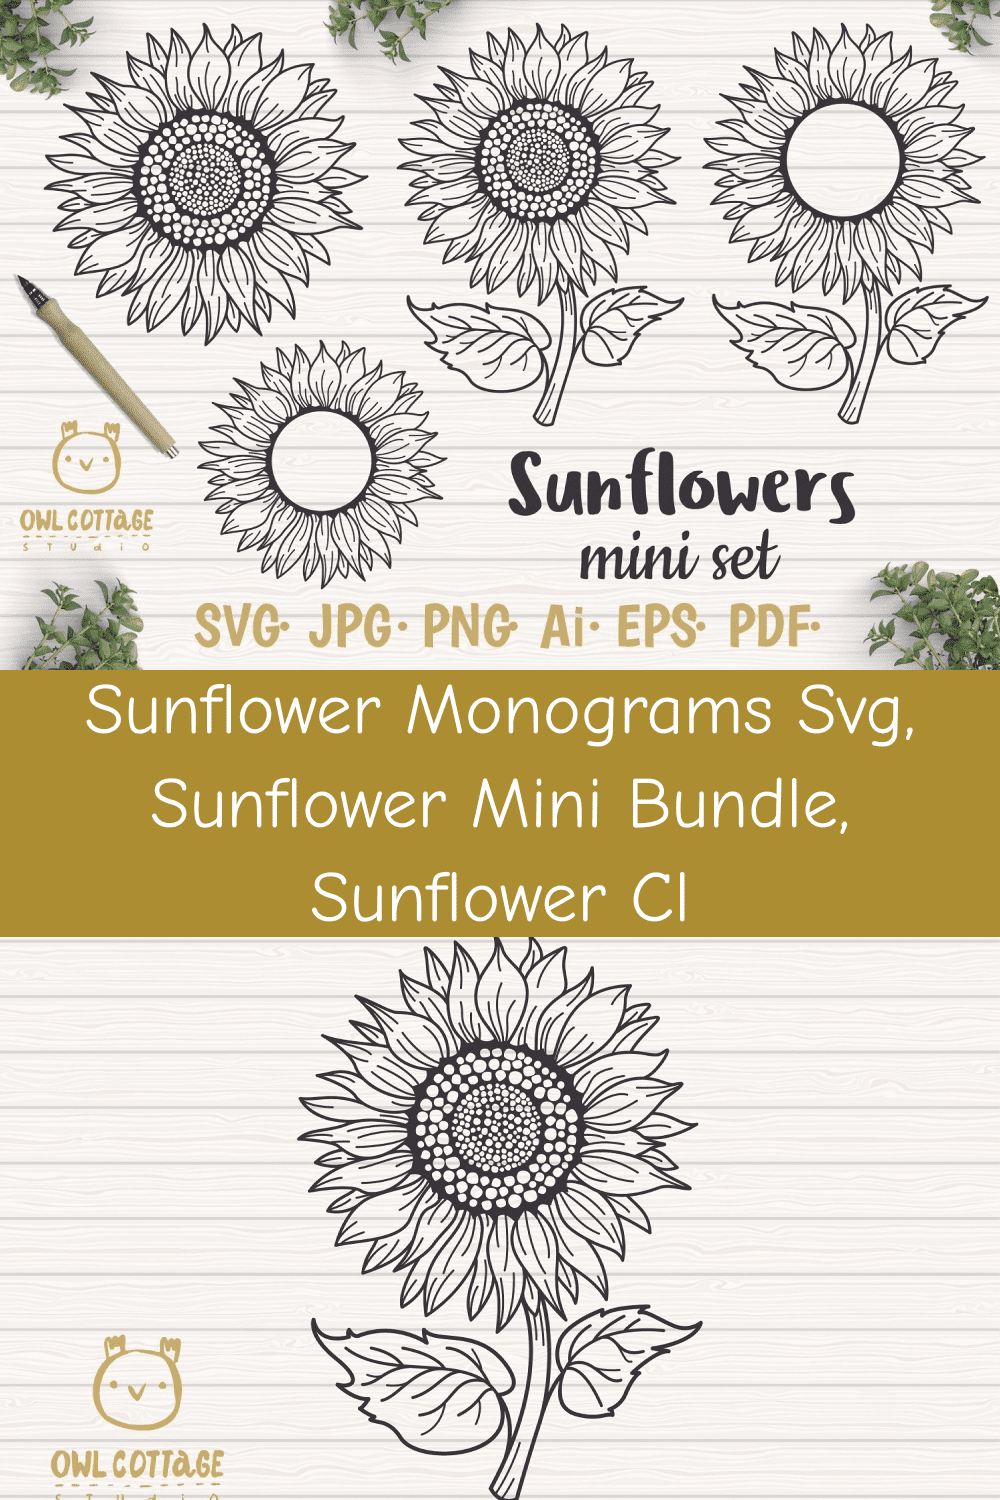 03 sunflower monograms svg sunflower mini bundle sunflower cl pinterest